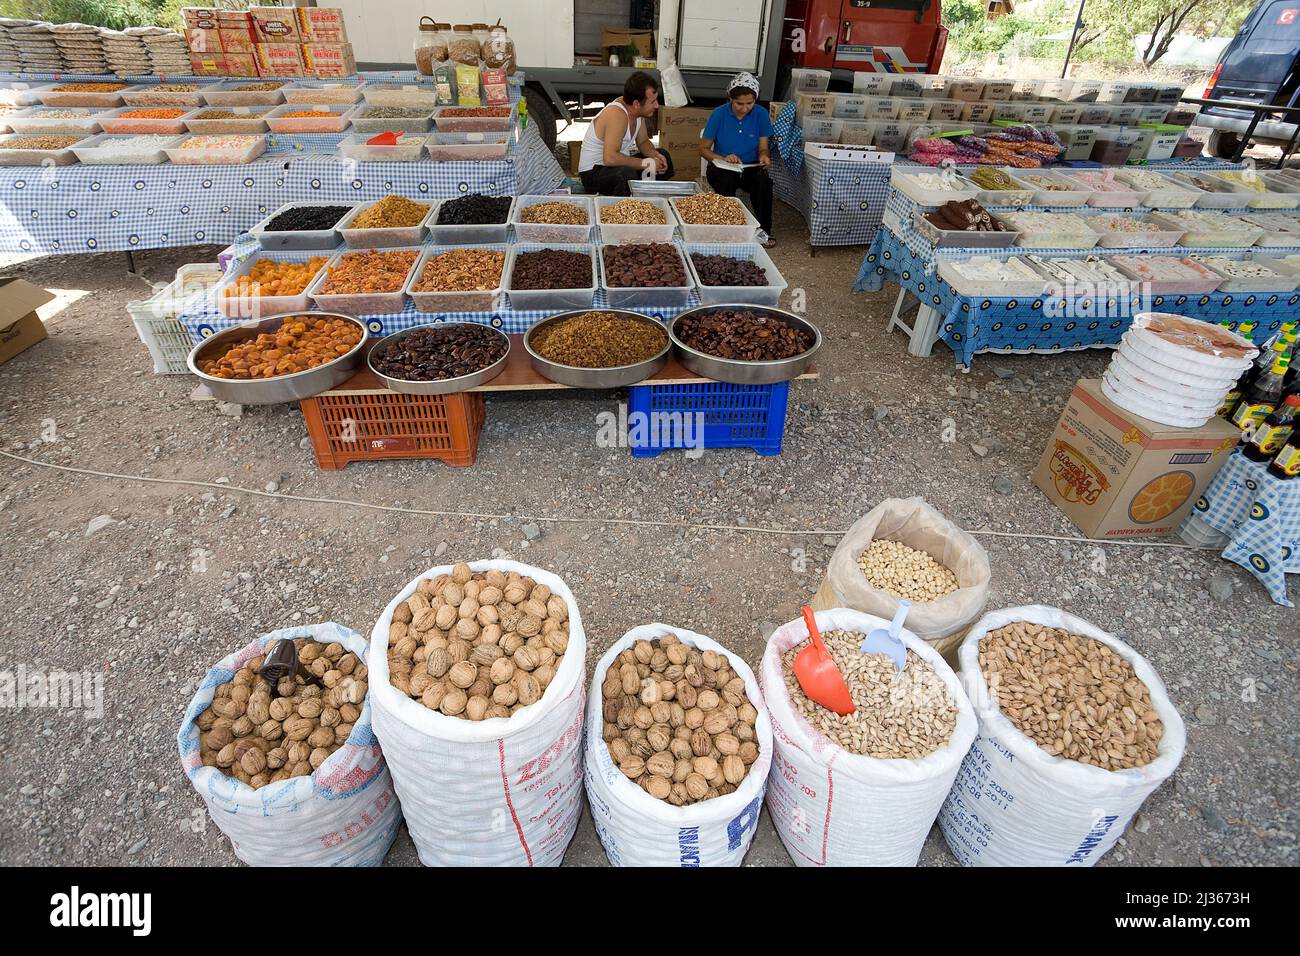 Farmers market at the village, Adrasan, Lykia, Turkey, Mediteranean sea Stock Photo